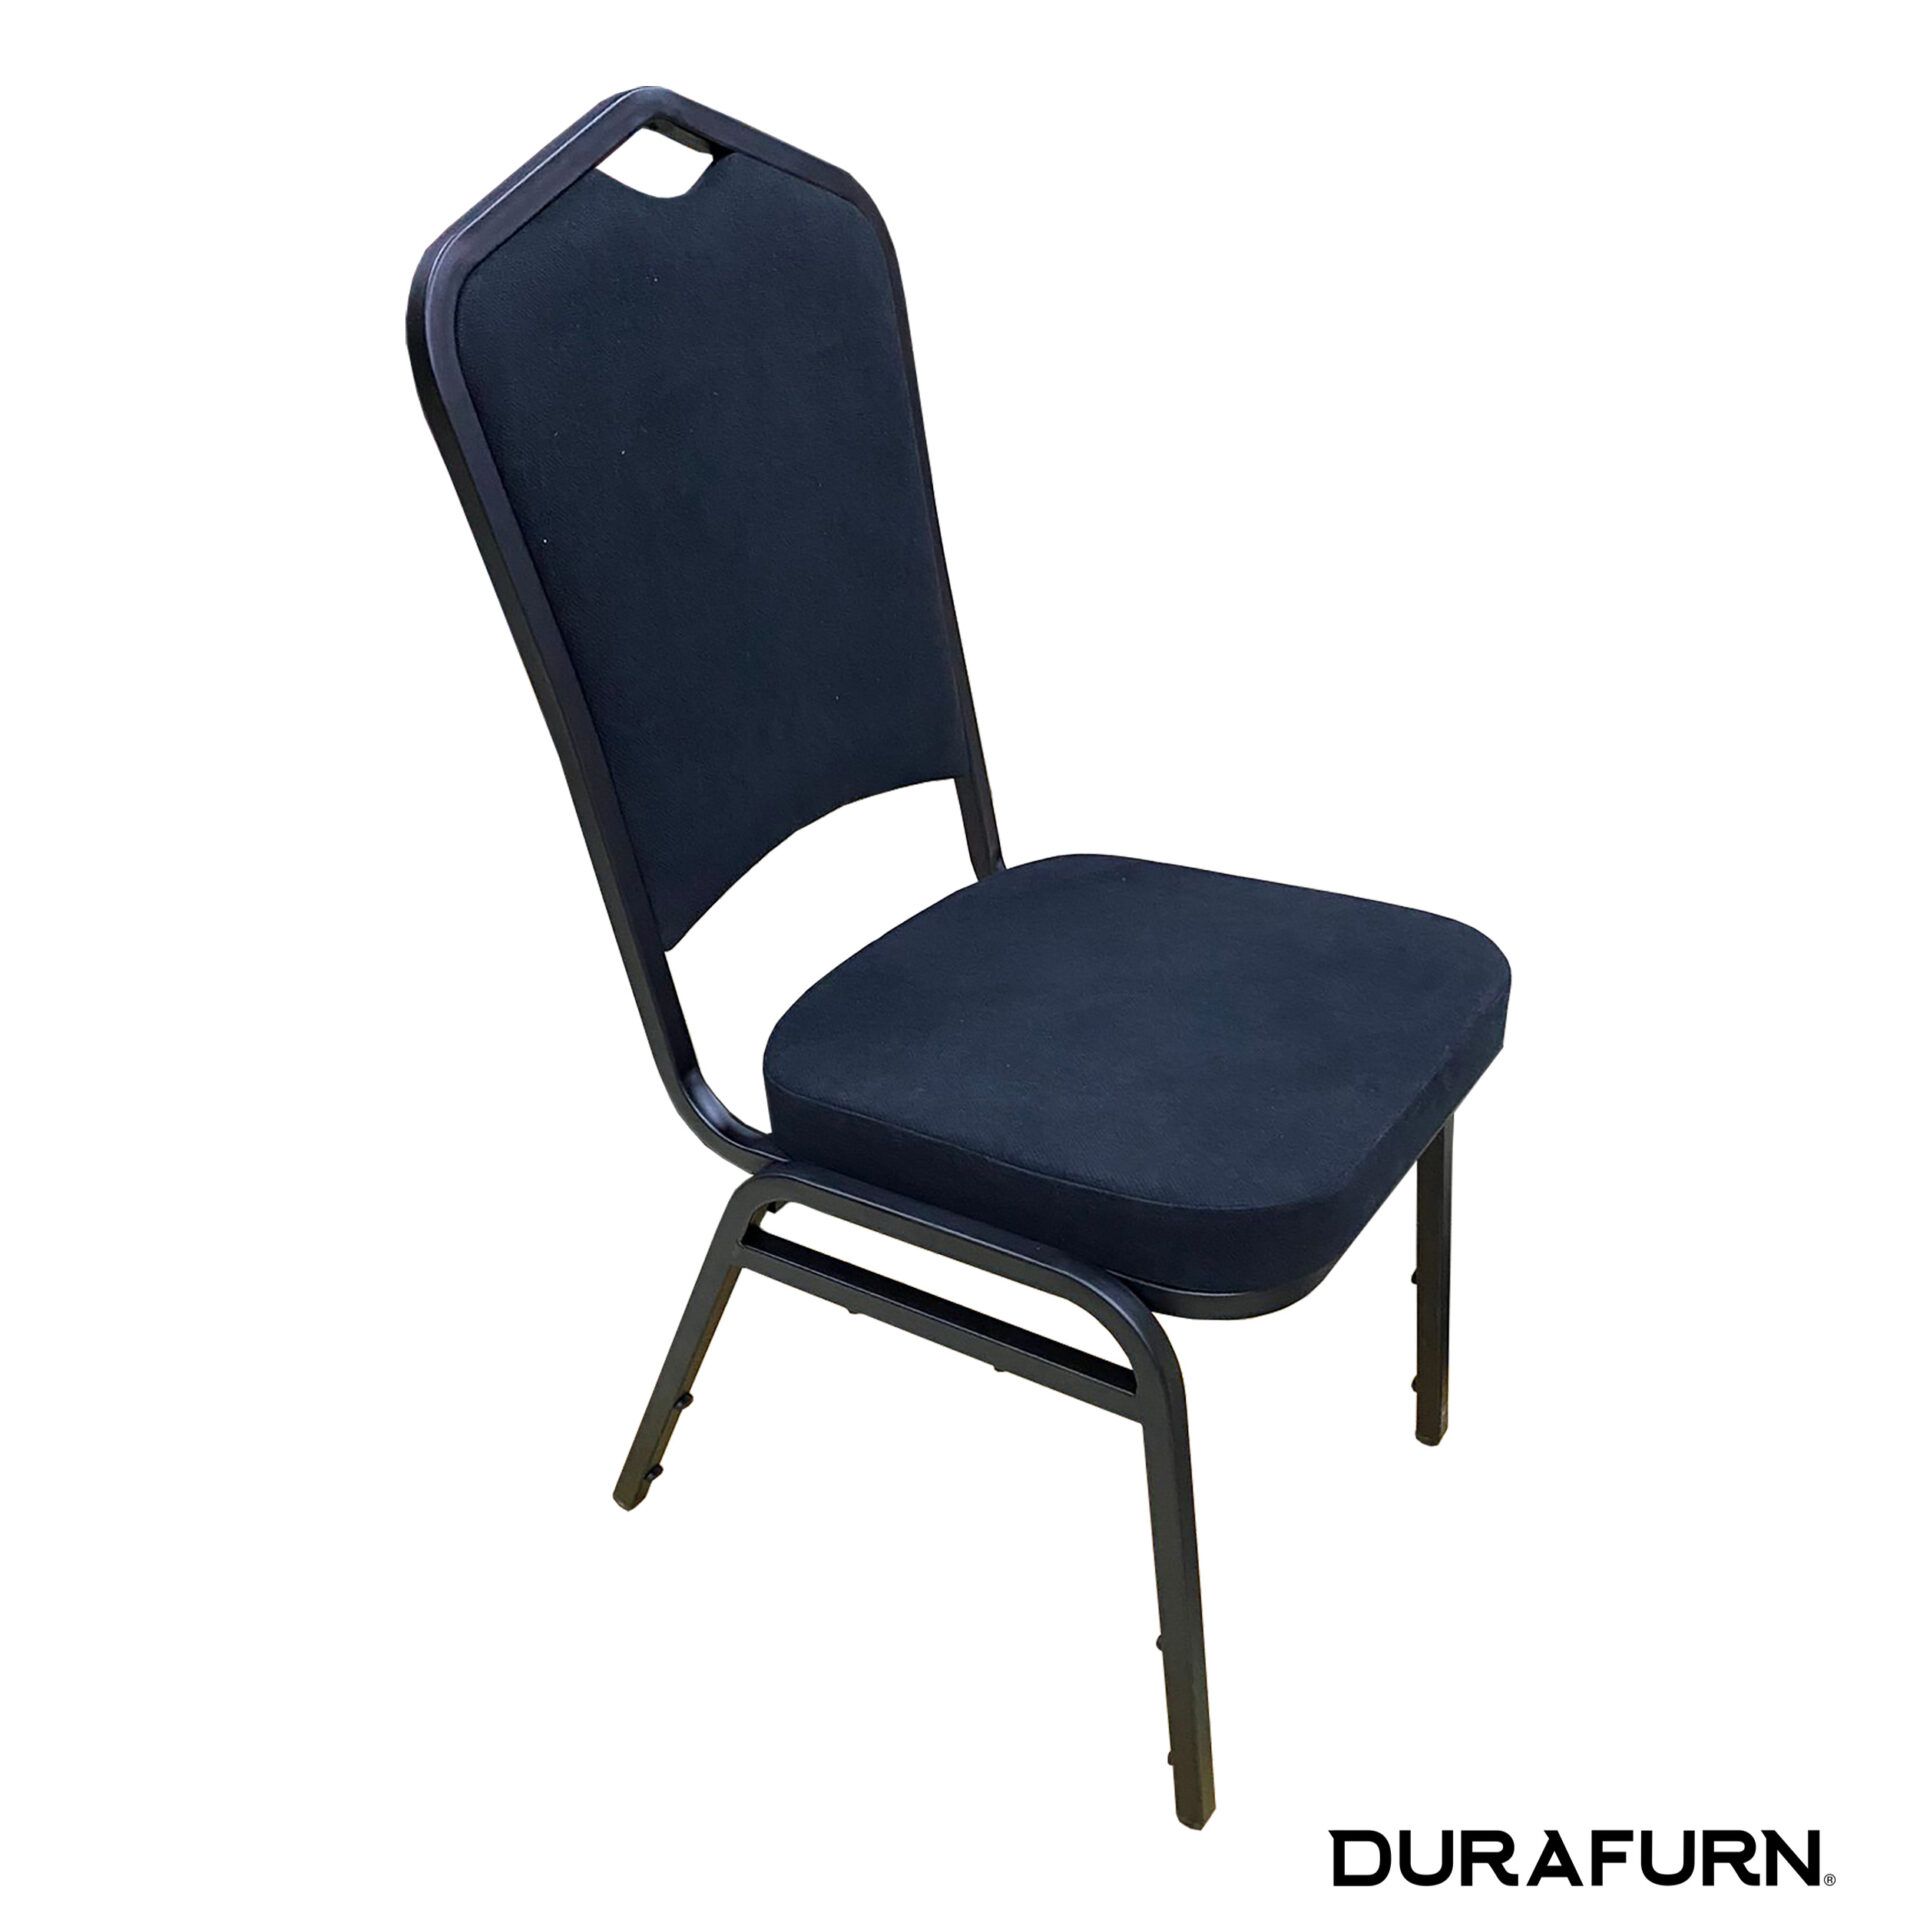 Deluxe Function Chair - Black/Black